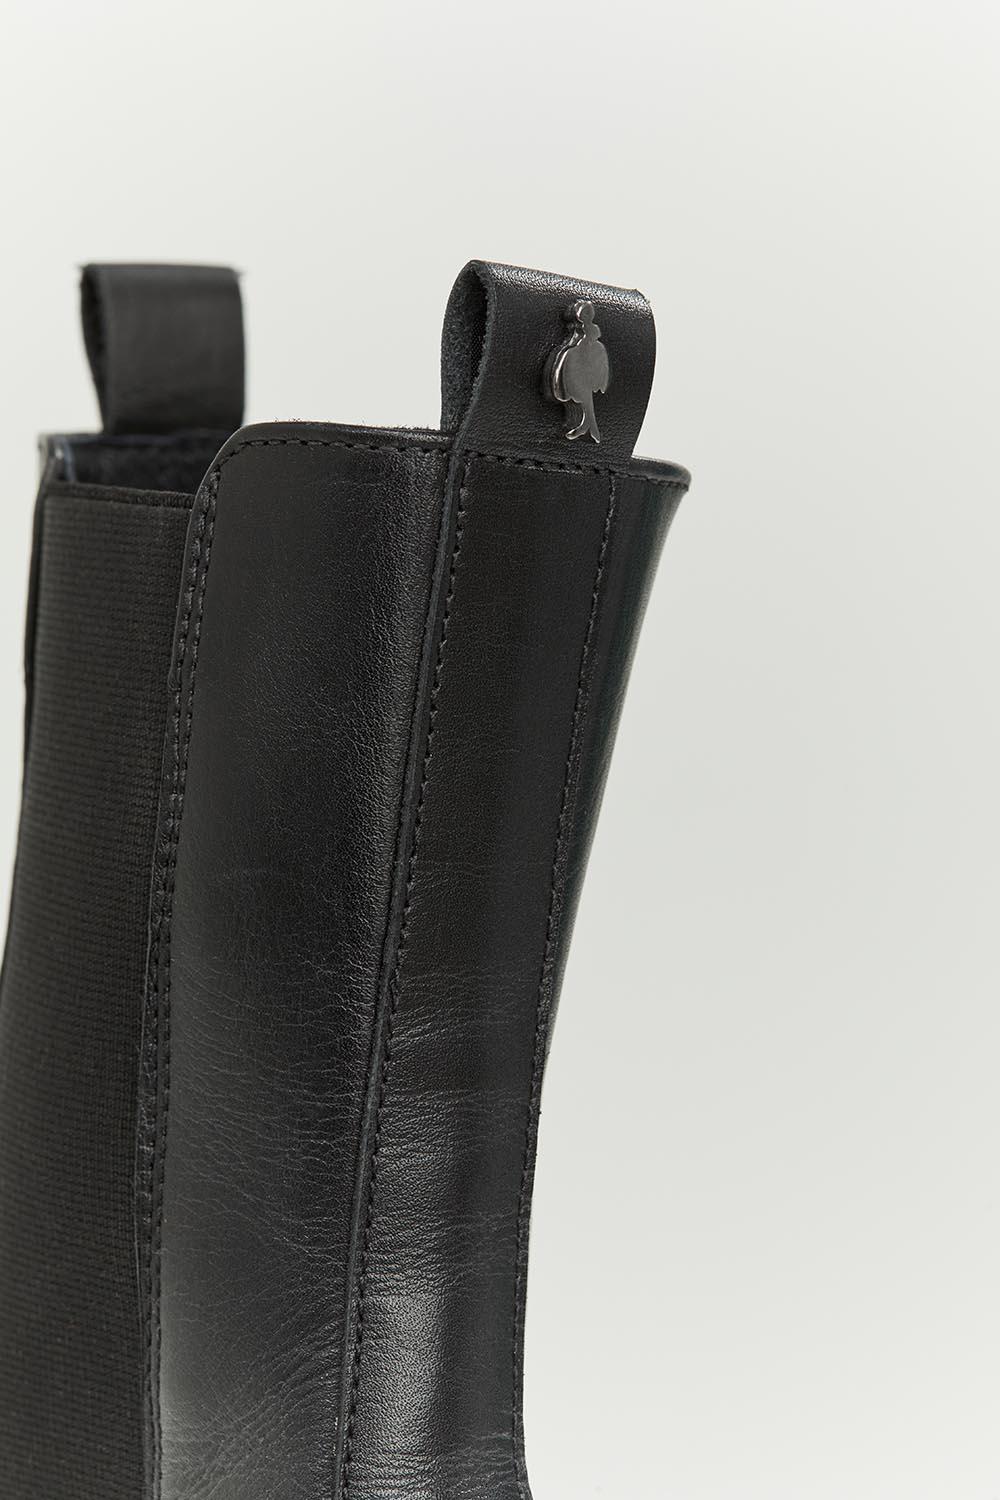 O.MAYA - Chelsea boots noirs en cuir à semelle crantée